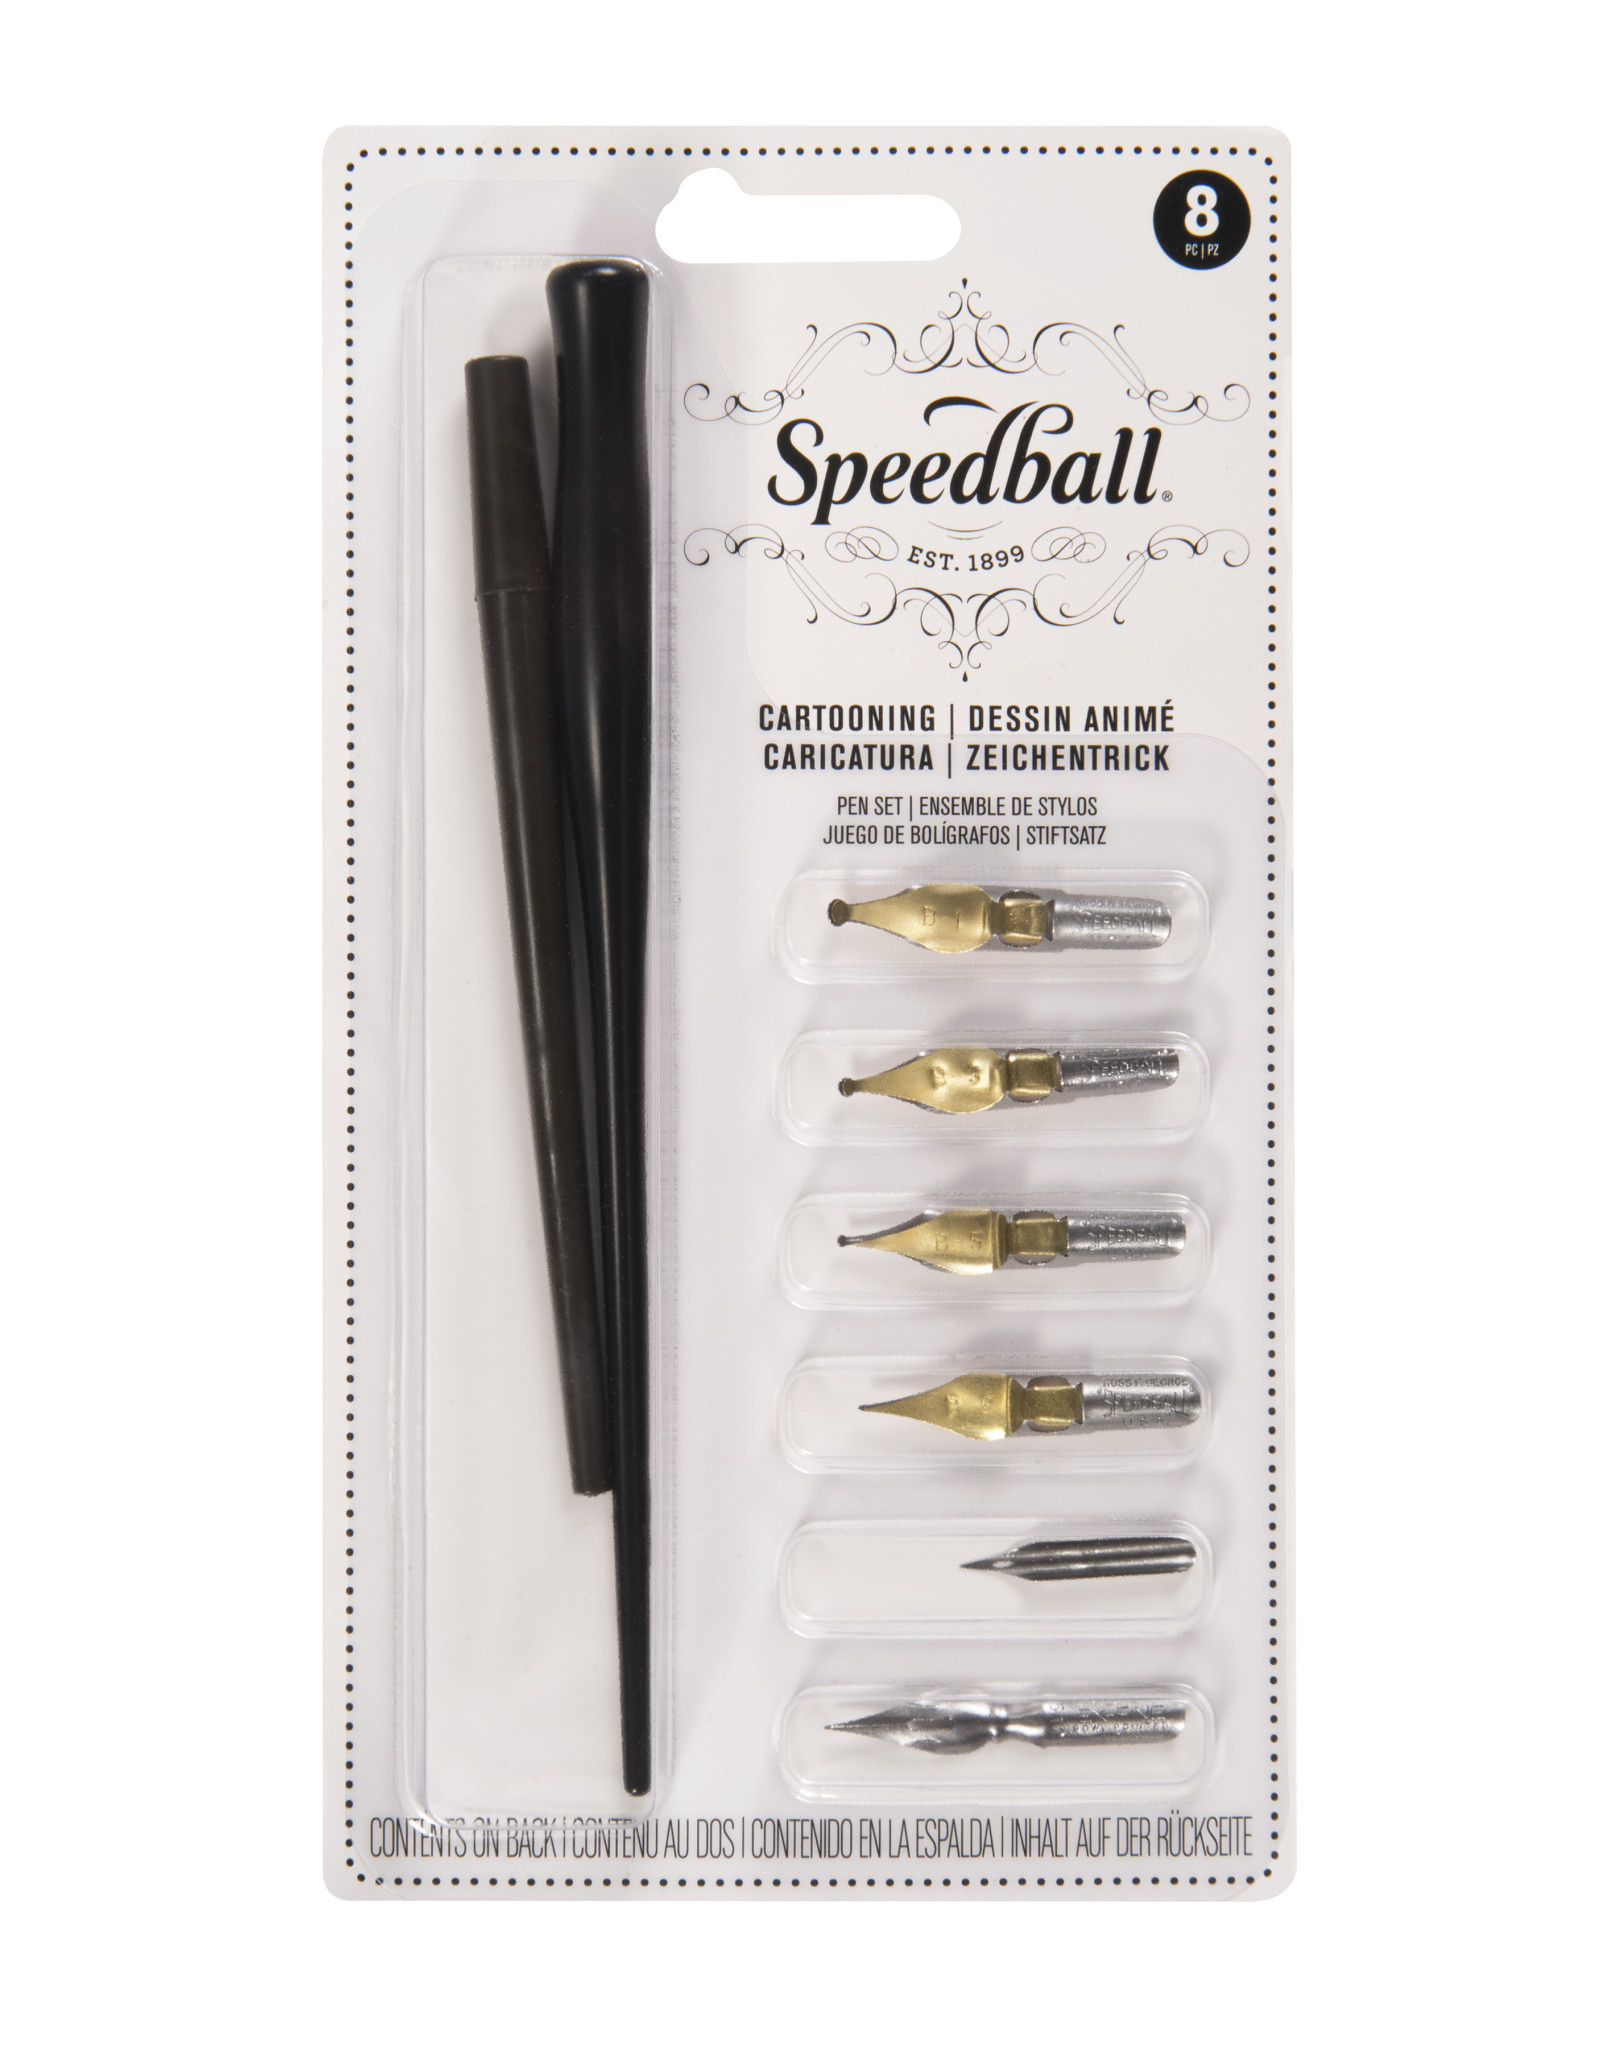 SPEEDBALL ART PRODUCTS Speedball Drawing & Writing Cartooning Set